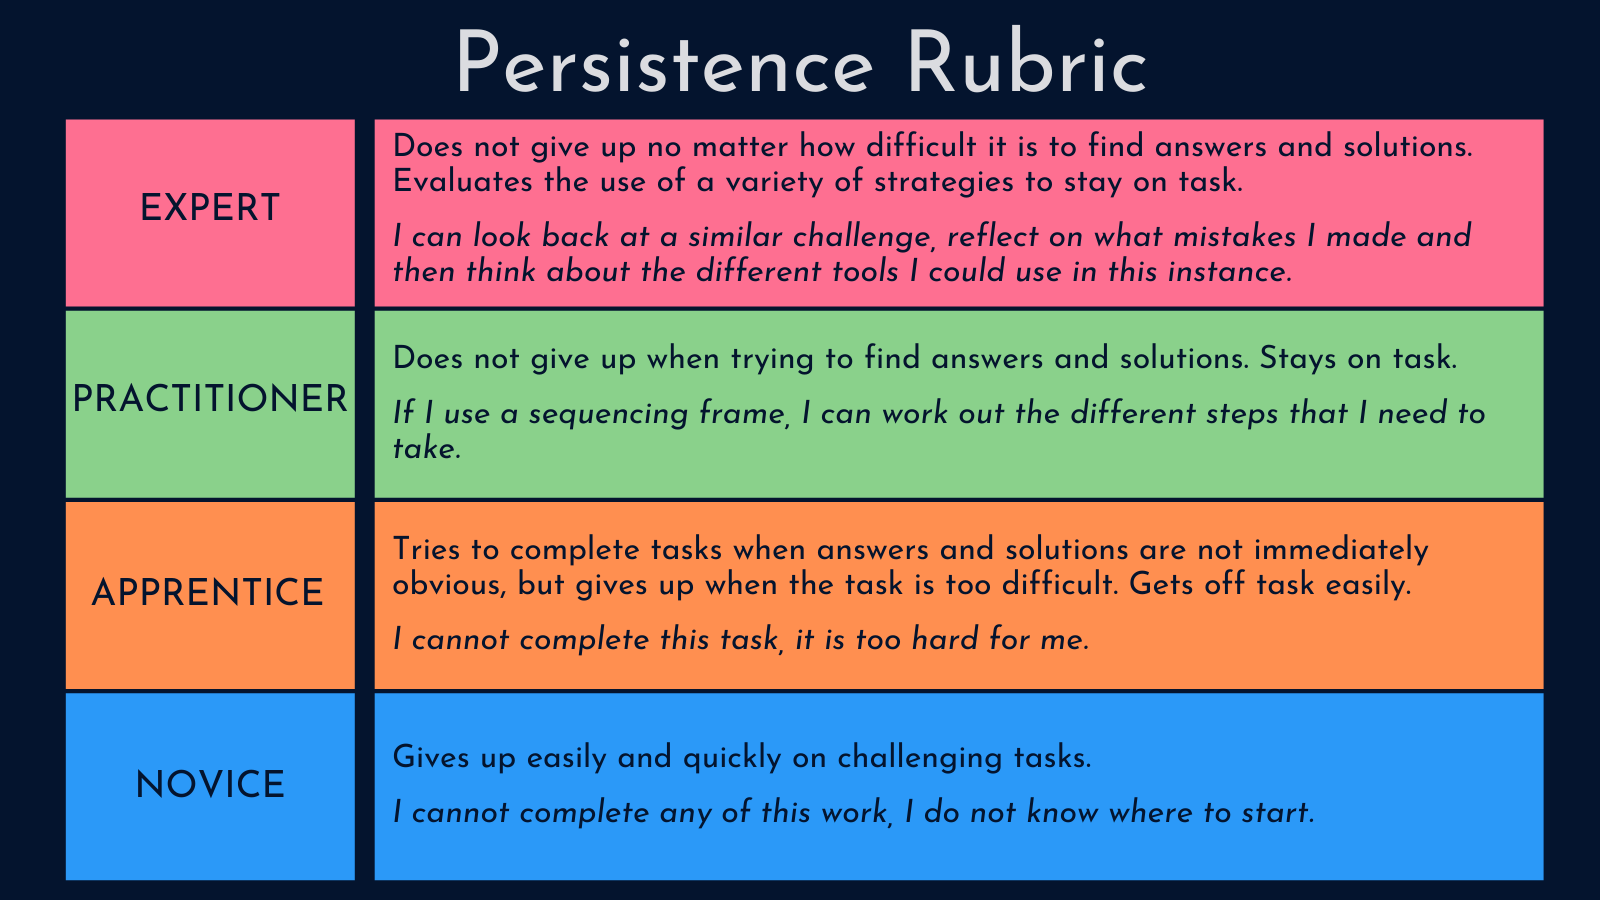 Persistence rubric